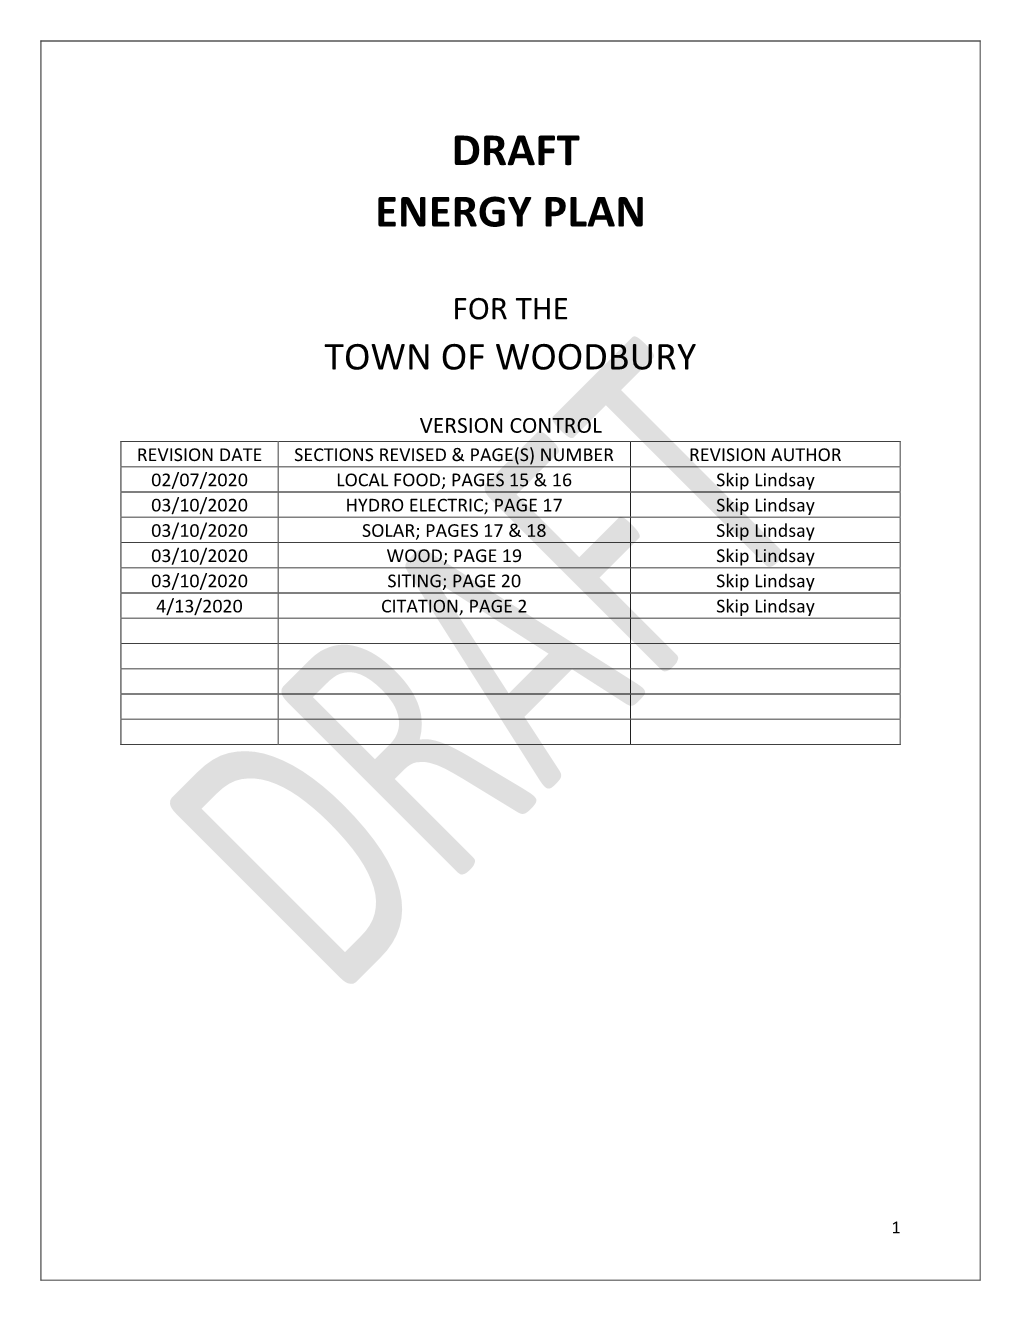 04.13.2020-Woodbury-Enhanced-Energy-Plan-Draft